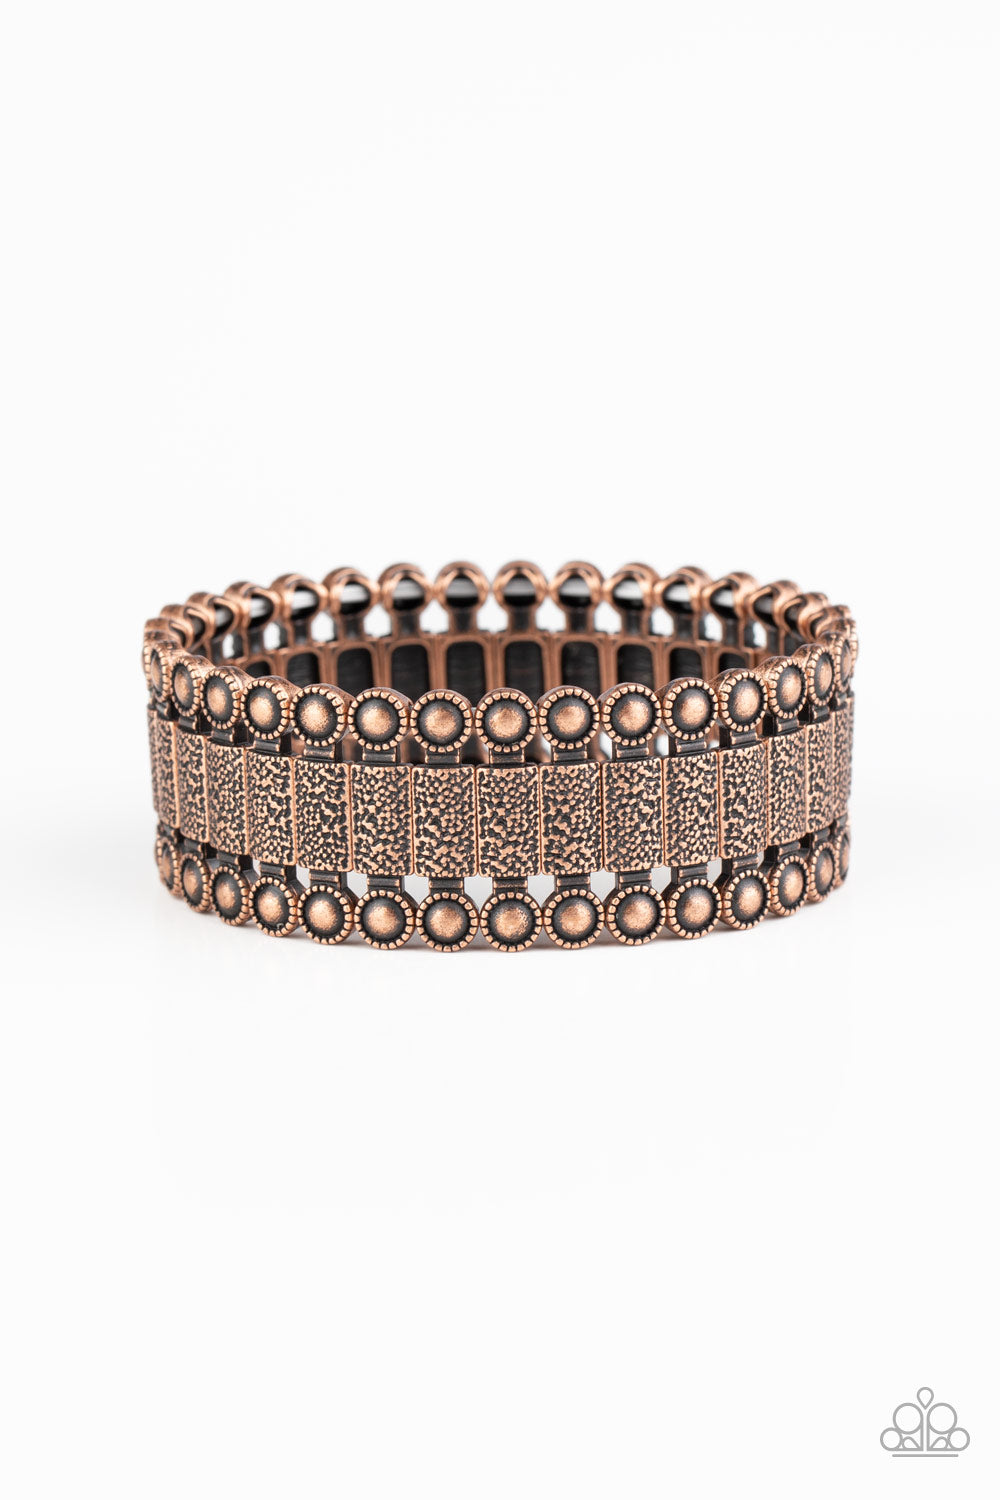 Rustic Rhythm - Copper Bracelet  - Paparazzi Accessories